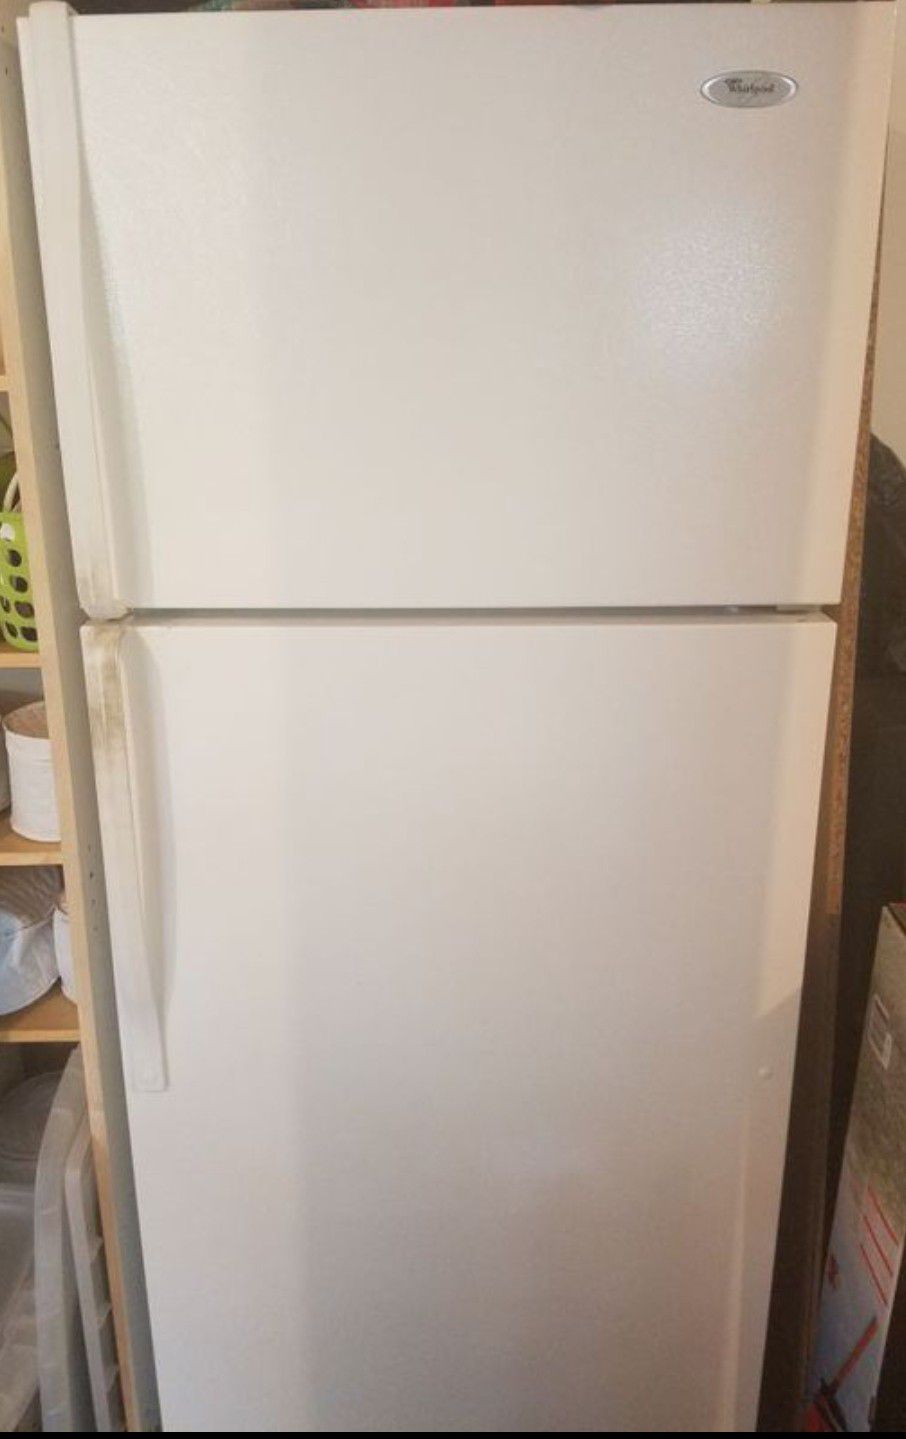 18'cu. Whirlpool refrigerator-freezer